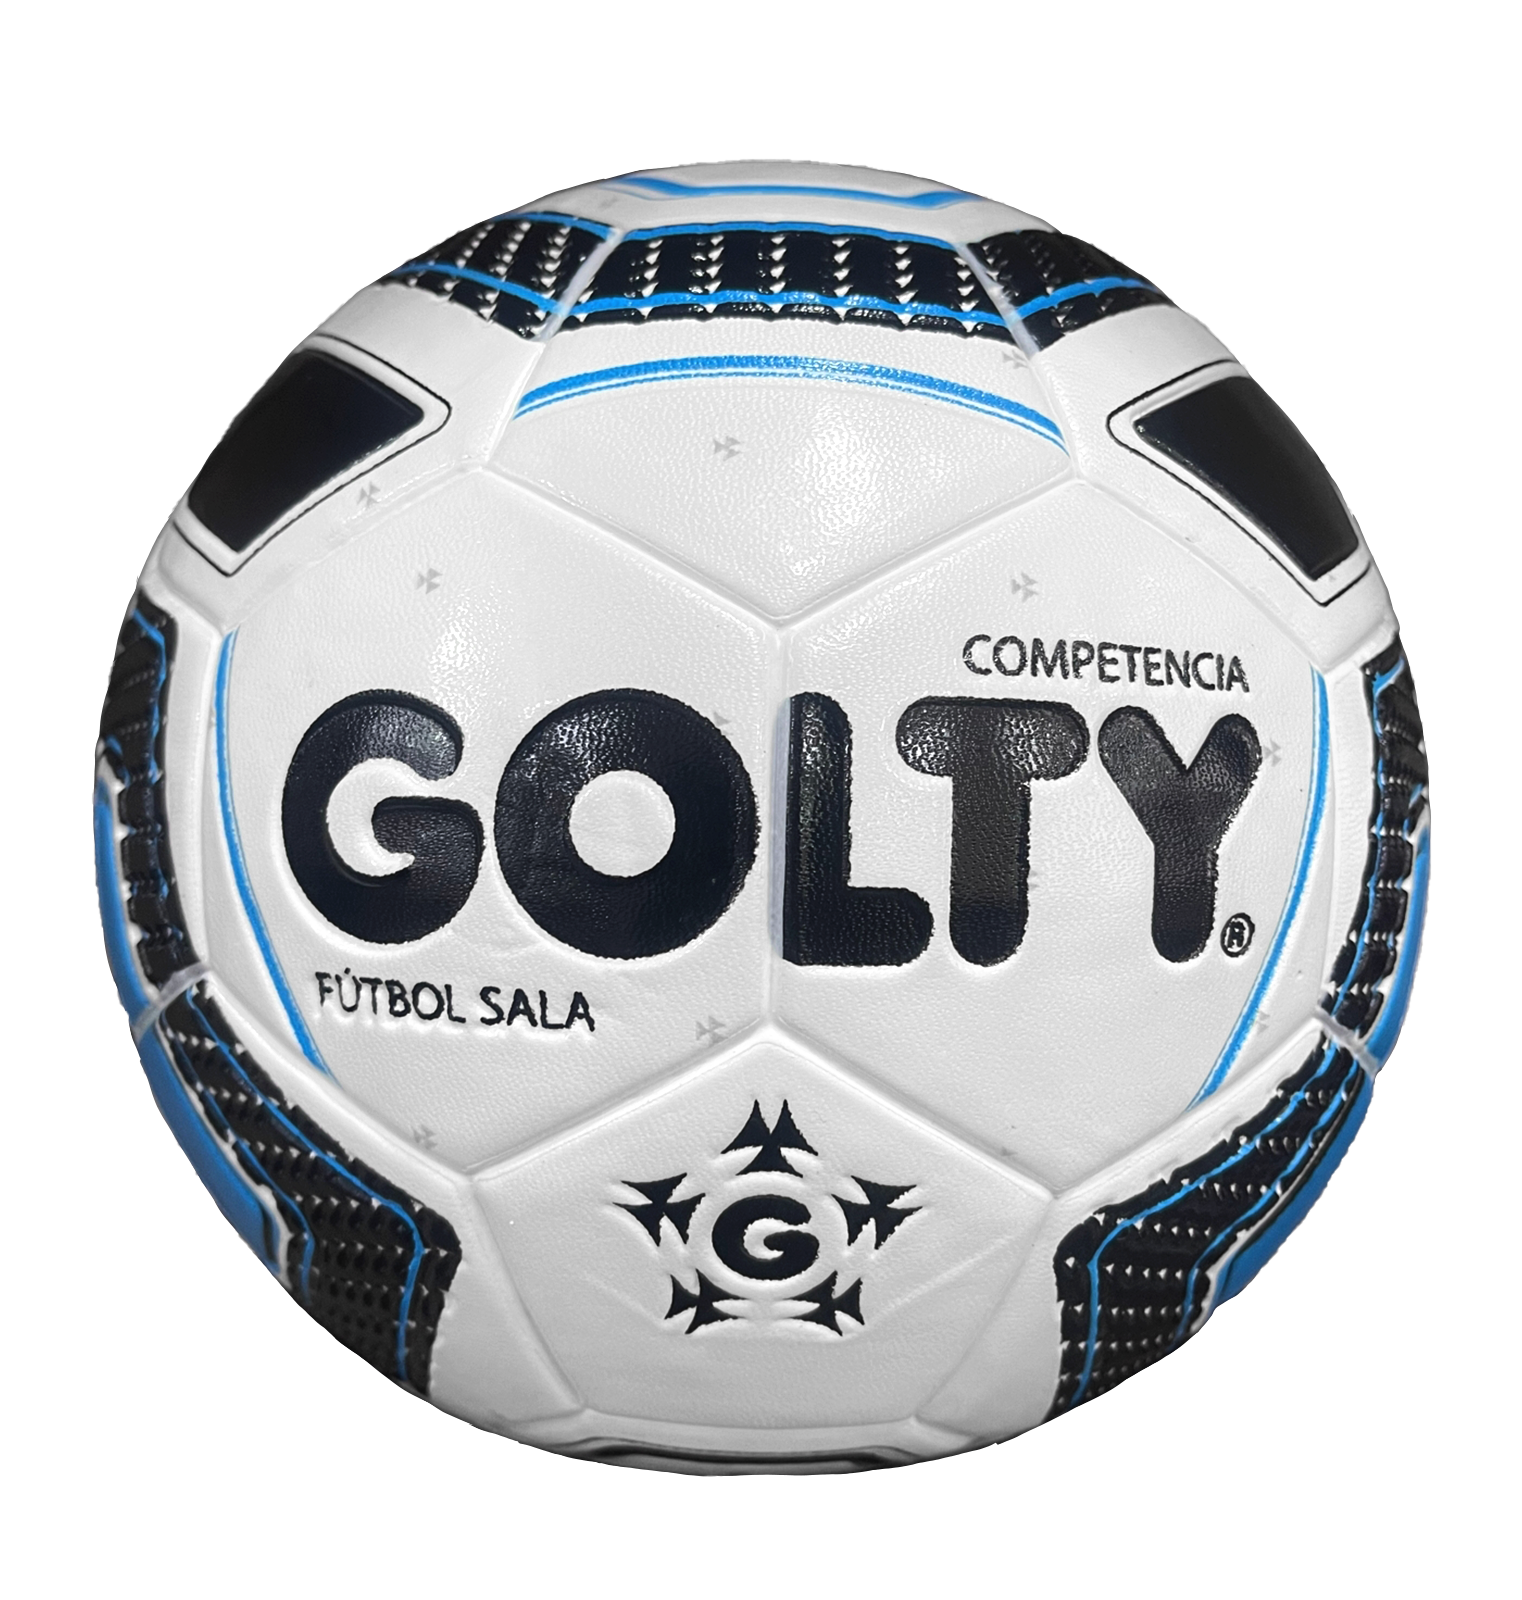 Balon futbol sala competicion golty on blanco